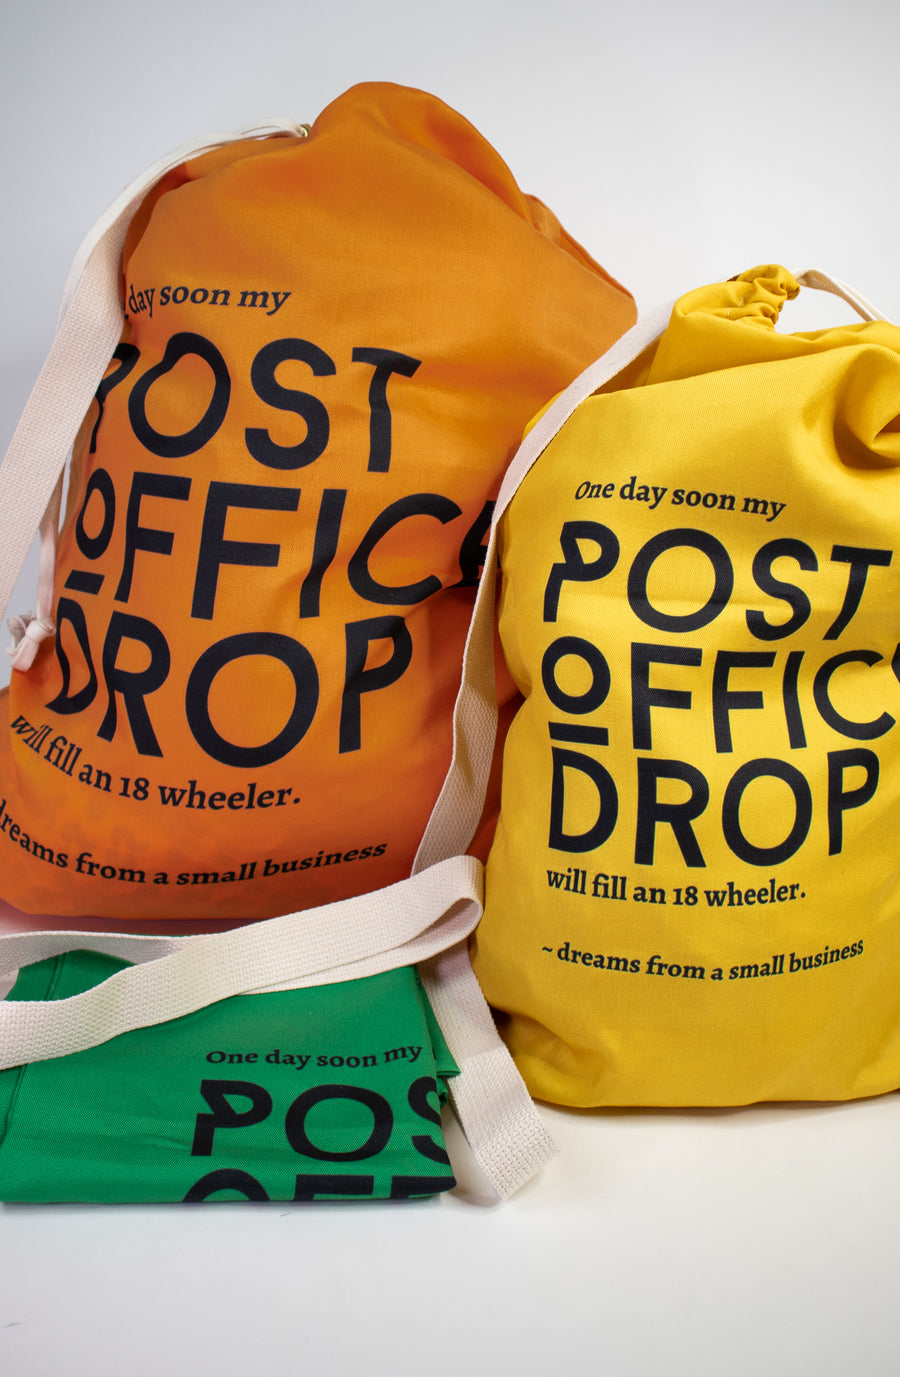 Post Office Dreams Orange